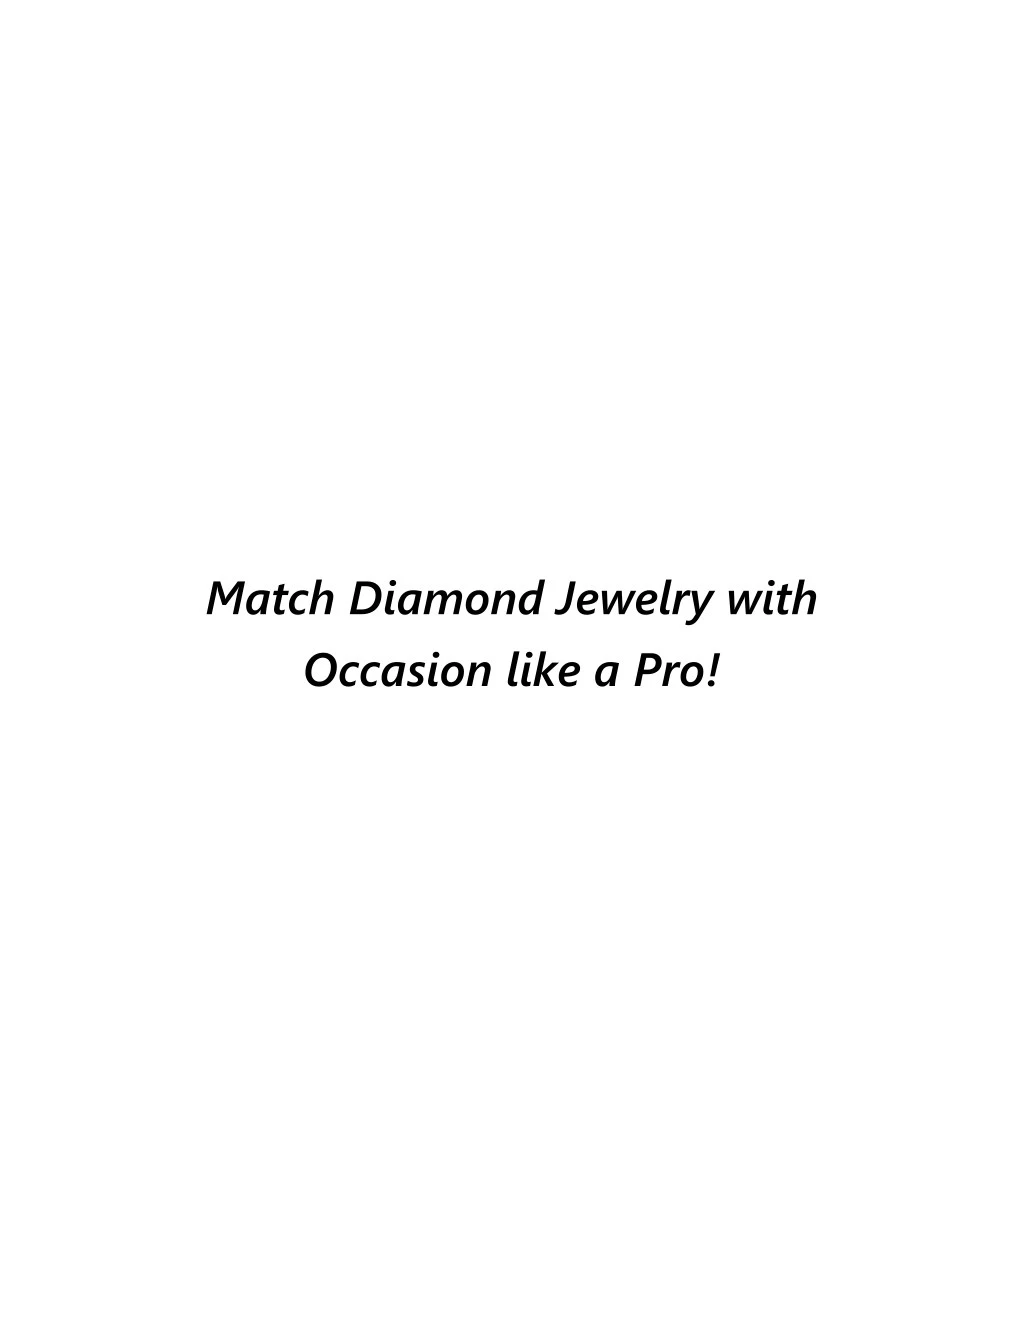 match diamond jewelry with occasion like a pro